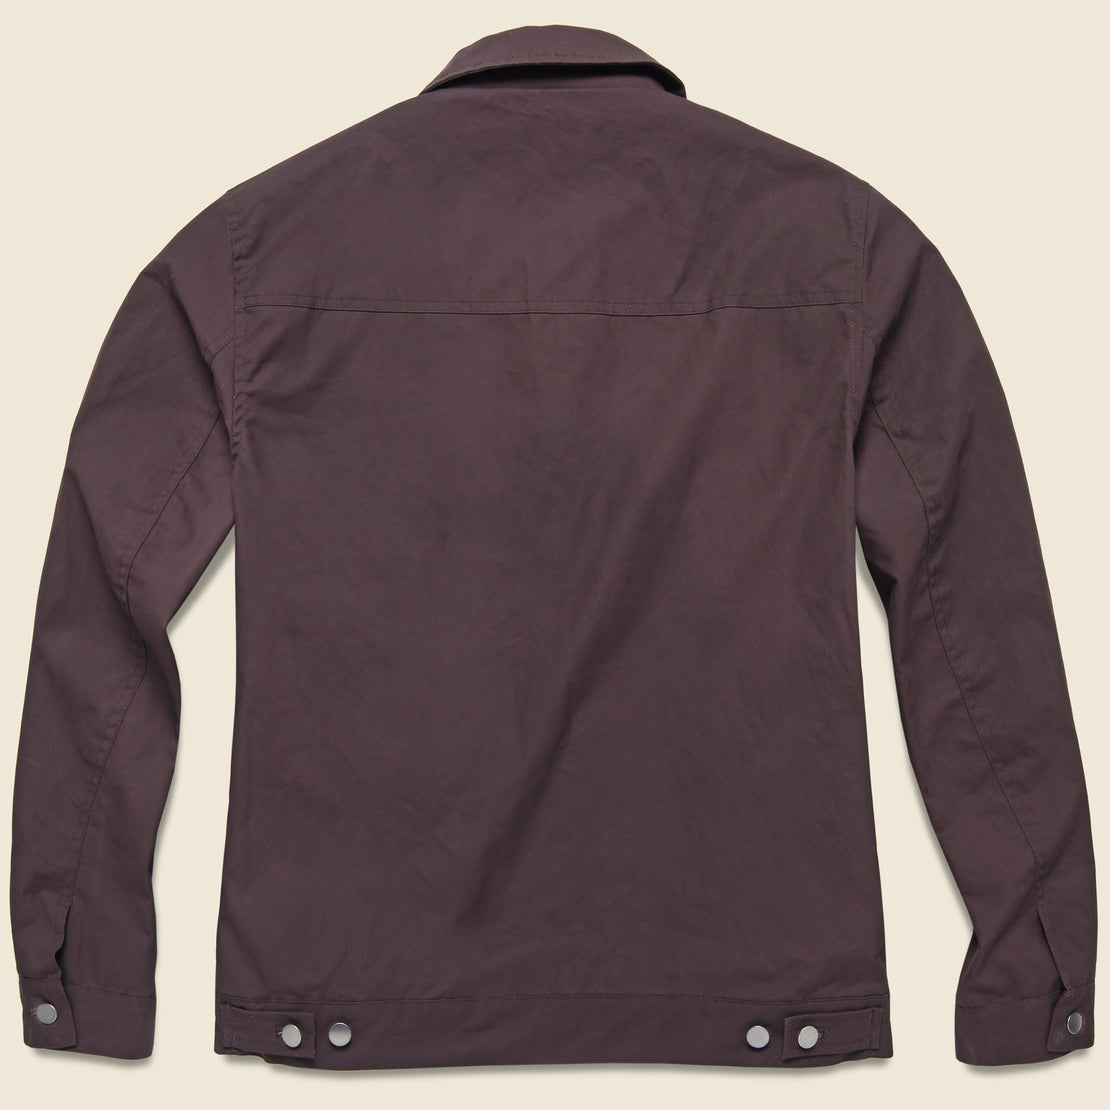 Tamarak Jacket - Russet - Bridge & Burn - STAG Provisions - Outerwear - Coat / Jacket